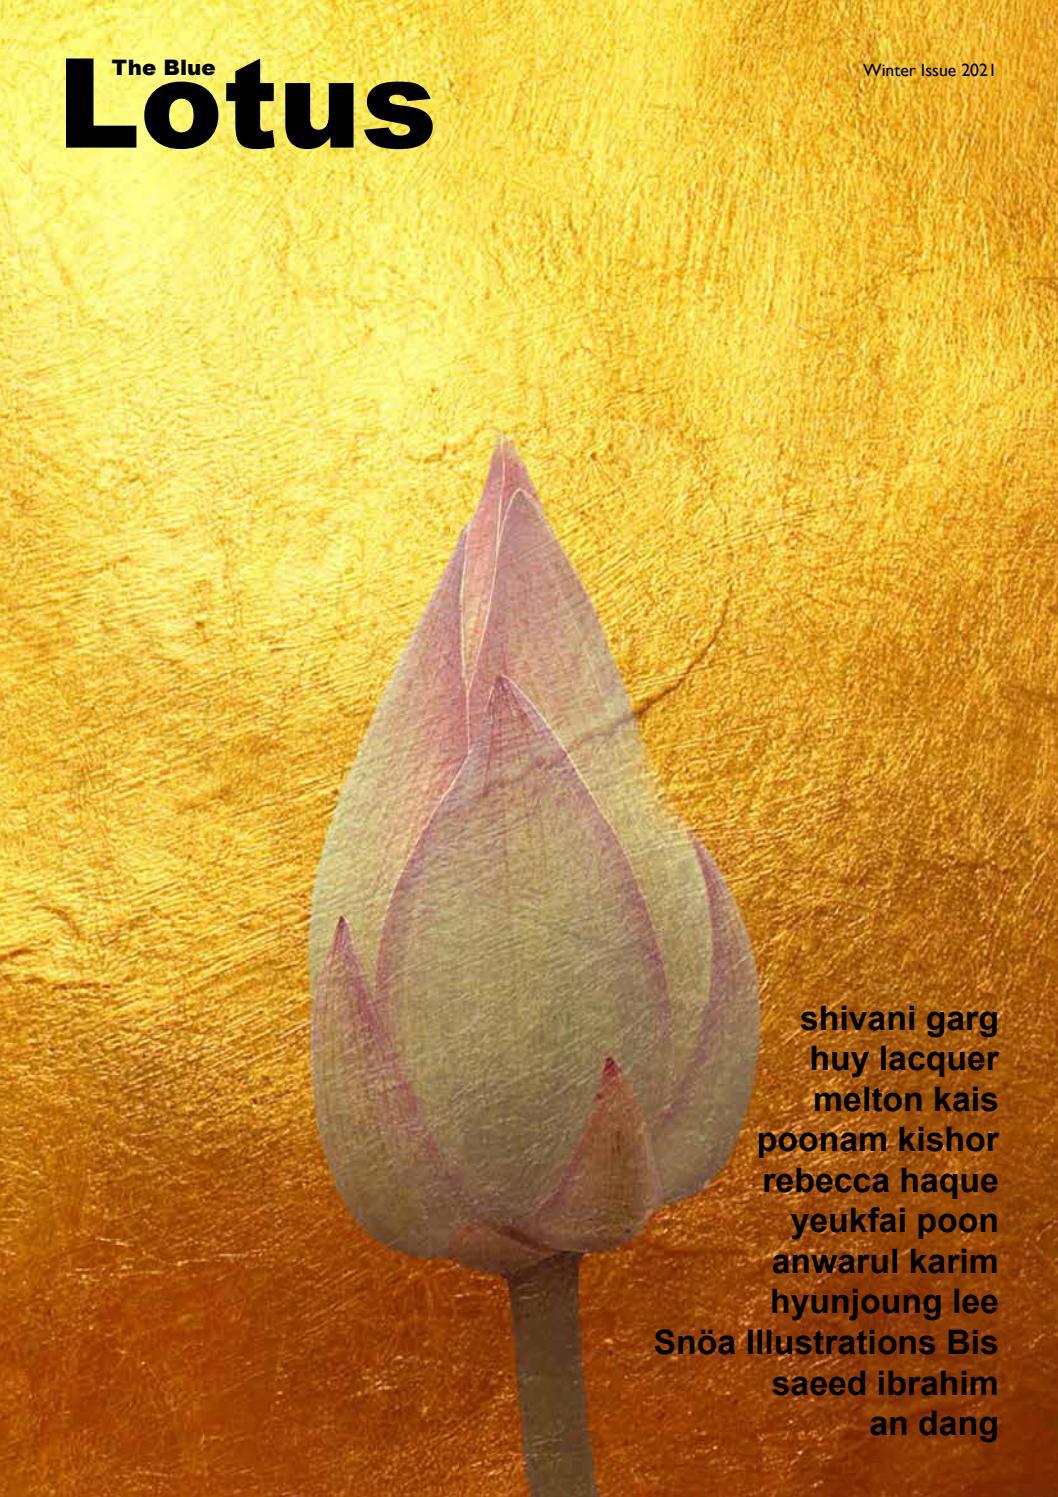 The Blue Lotus magazine issue 51